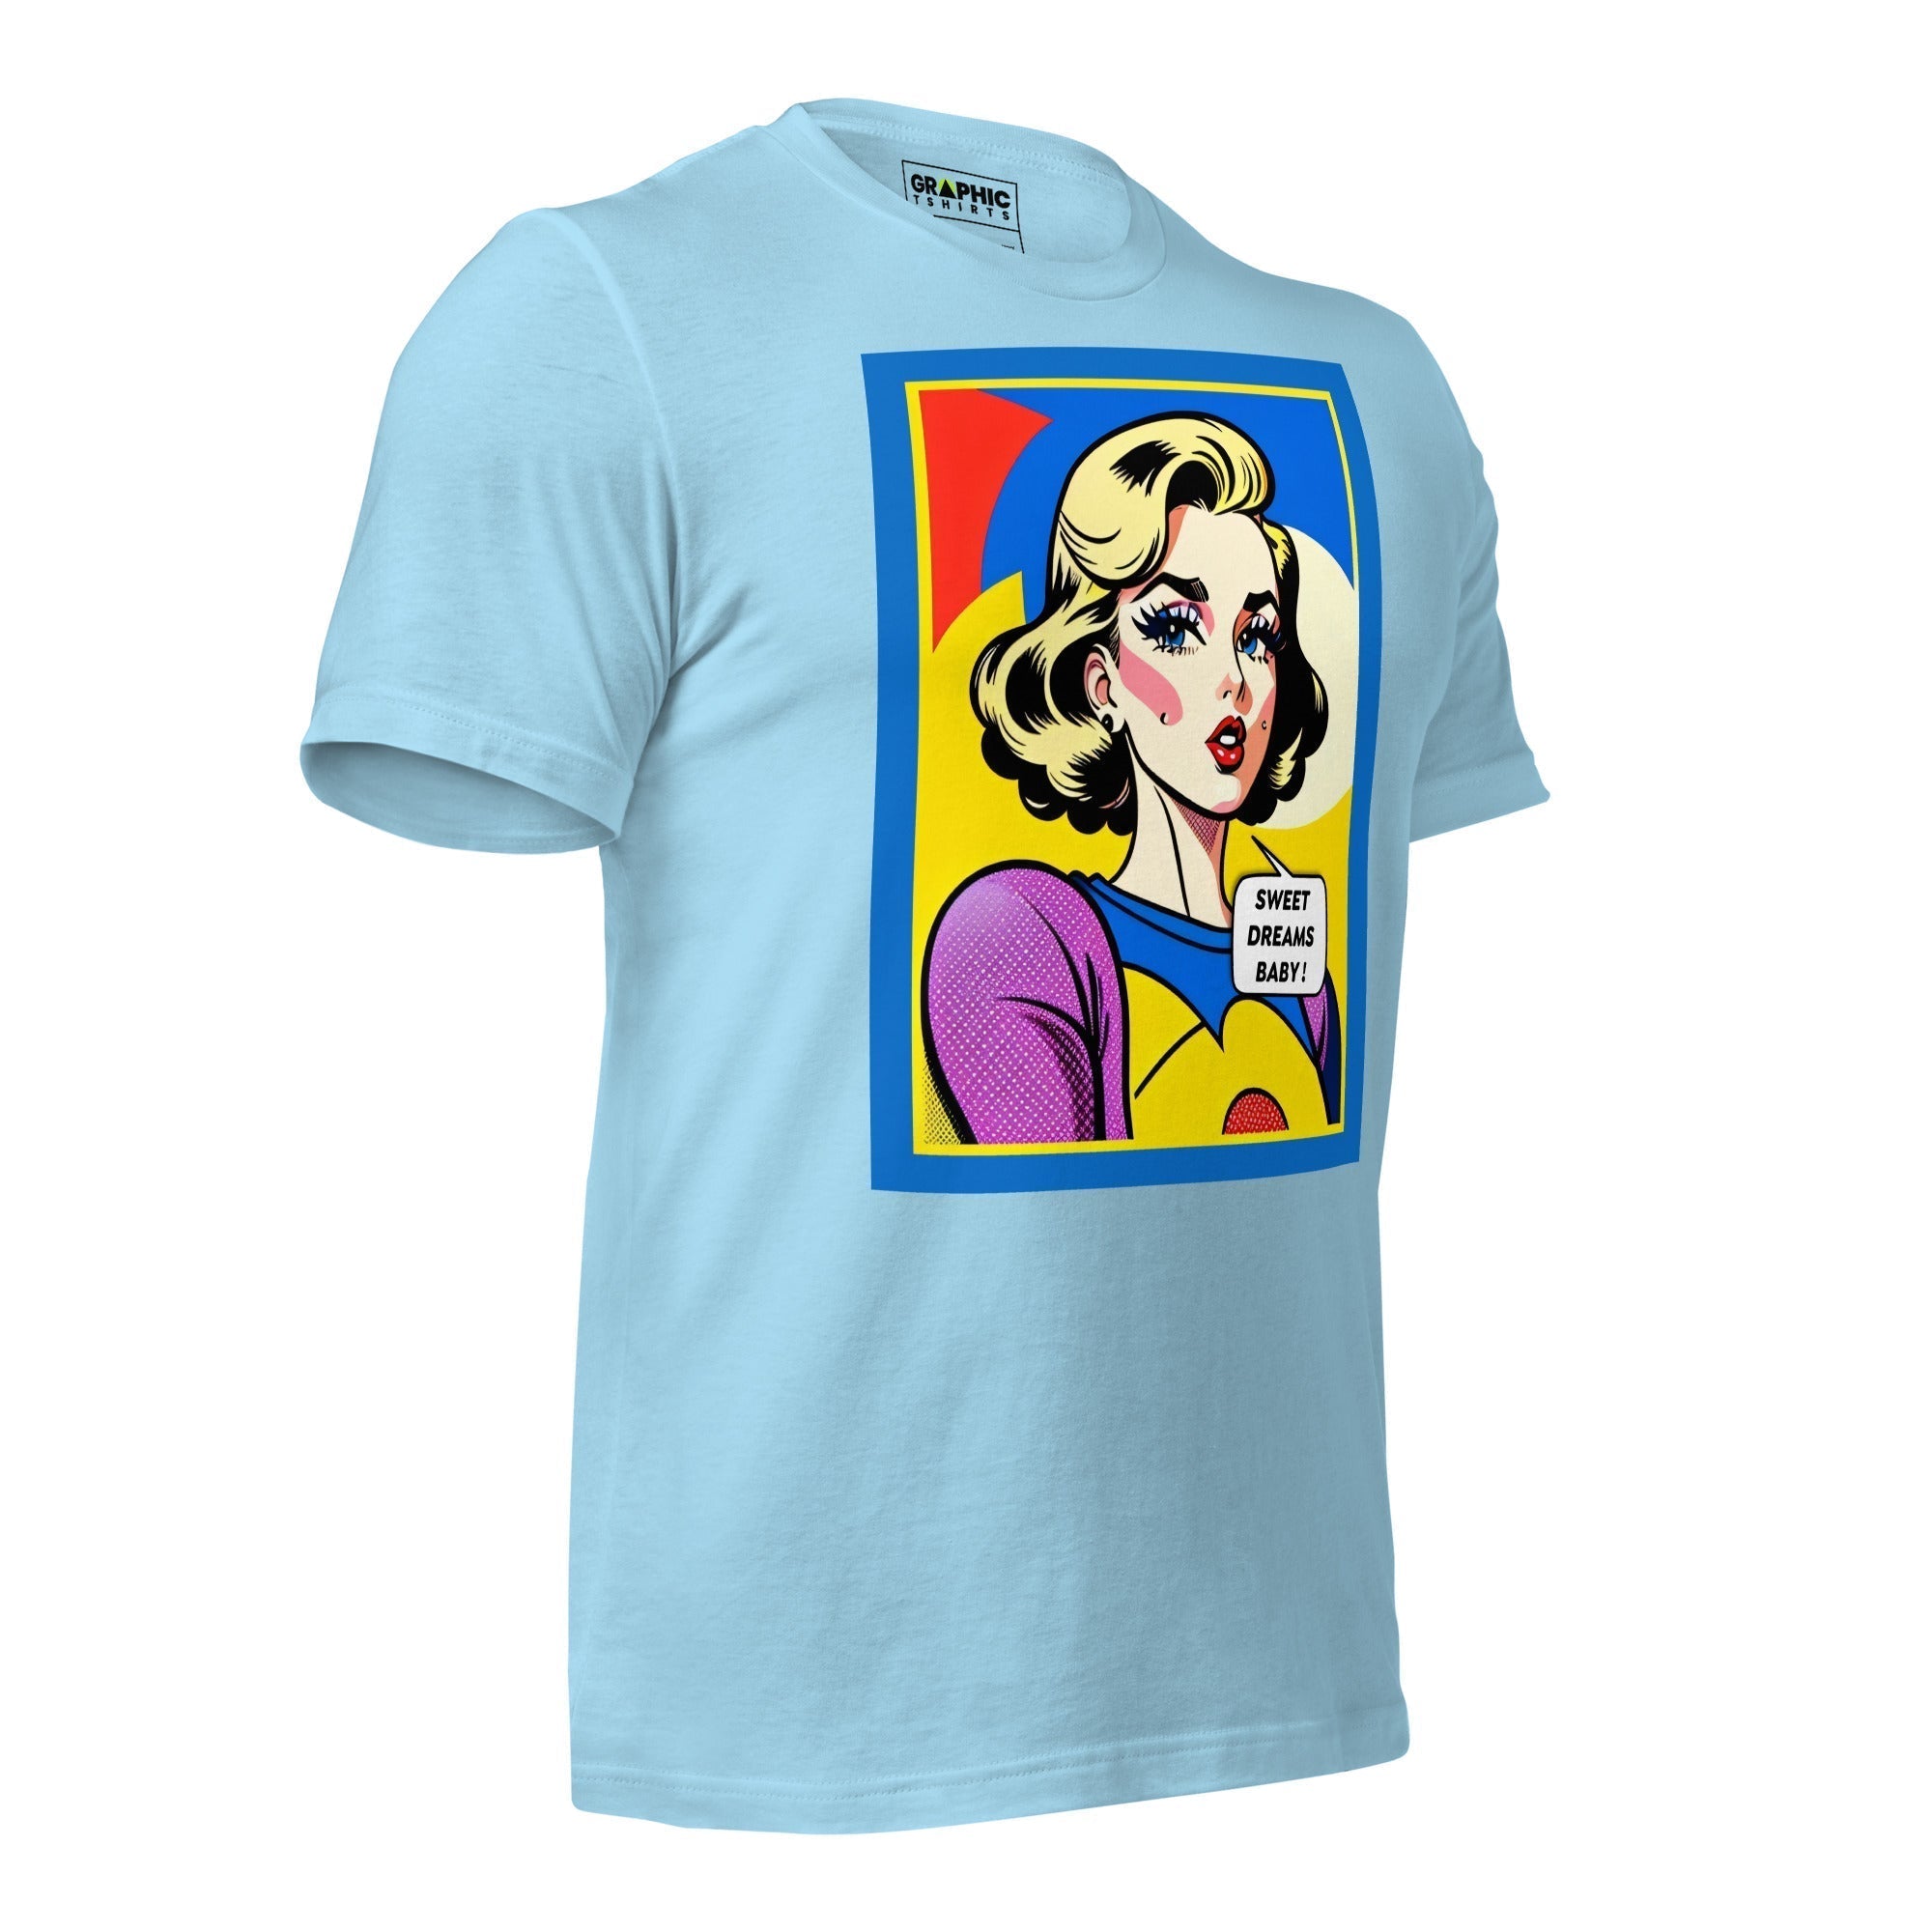 Unisex Crew Neck T-Shirt - Vintage American Comic Series v.43 - GRAPHIC T-SHIRTS